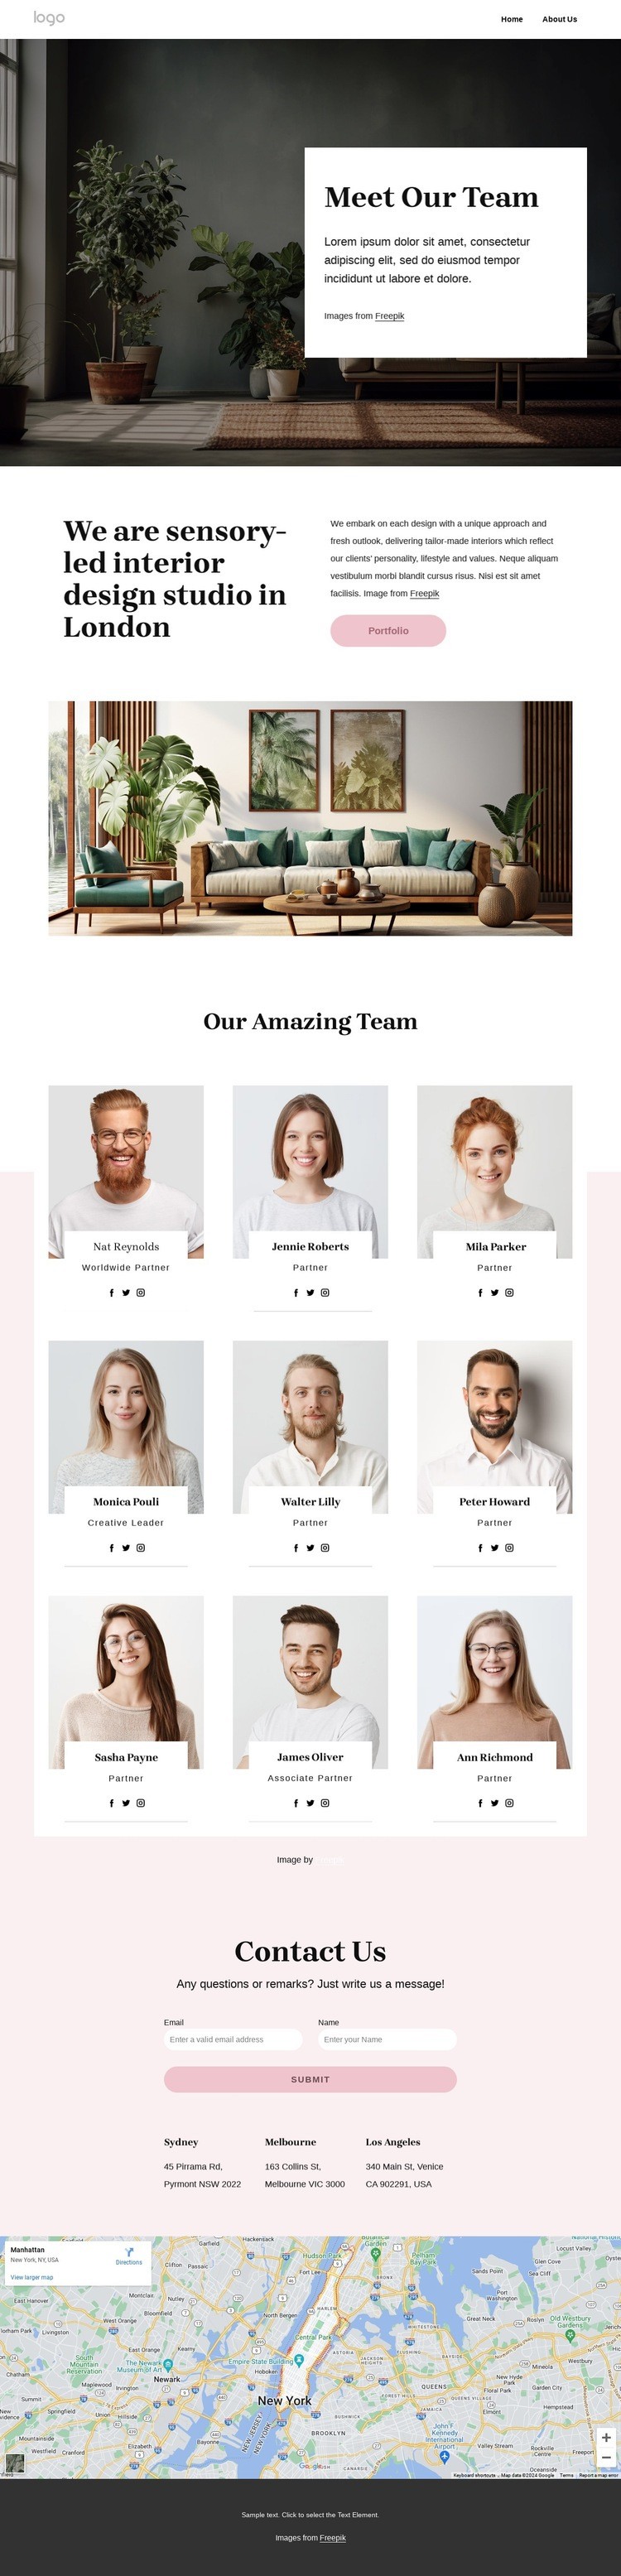 Meet interior studio team Web Page Design